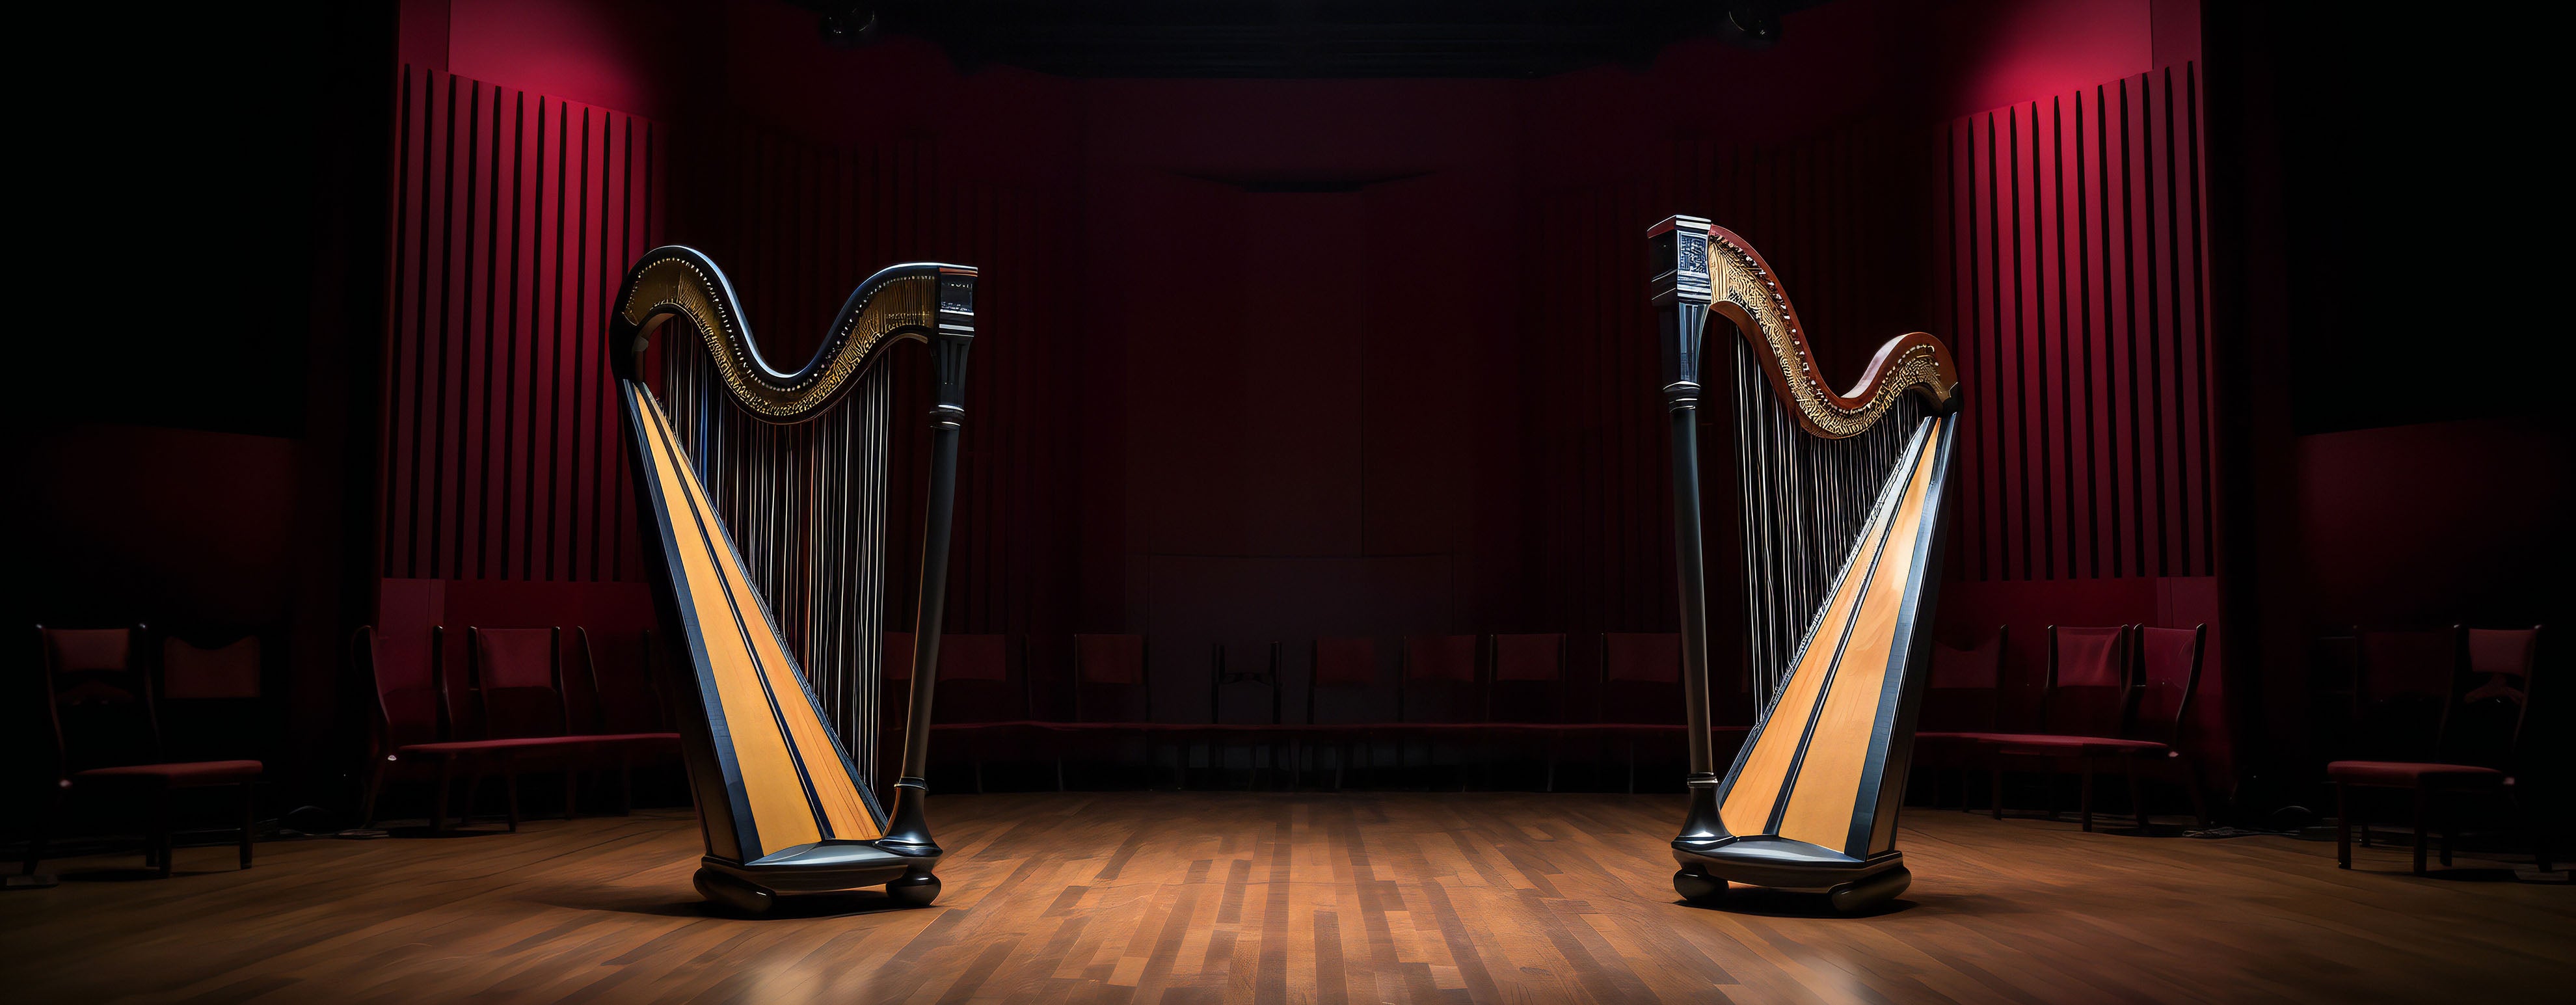 Century Harps